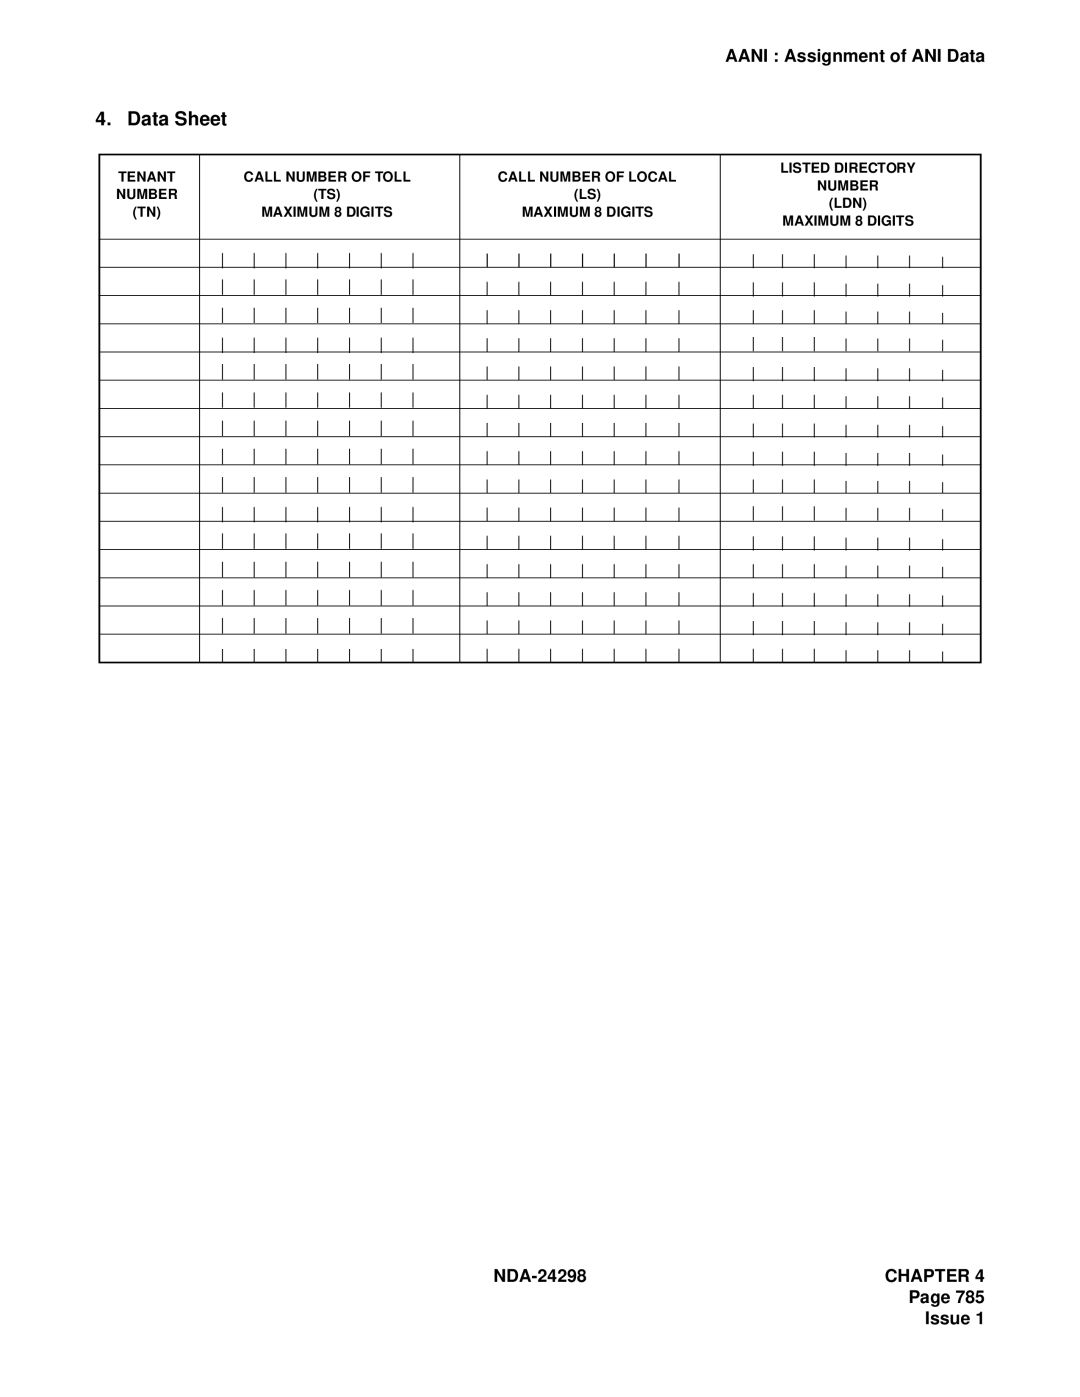 NEC NDA-24298 manual Data Sheet 